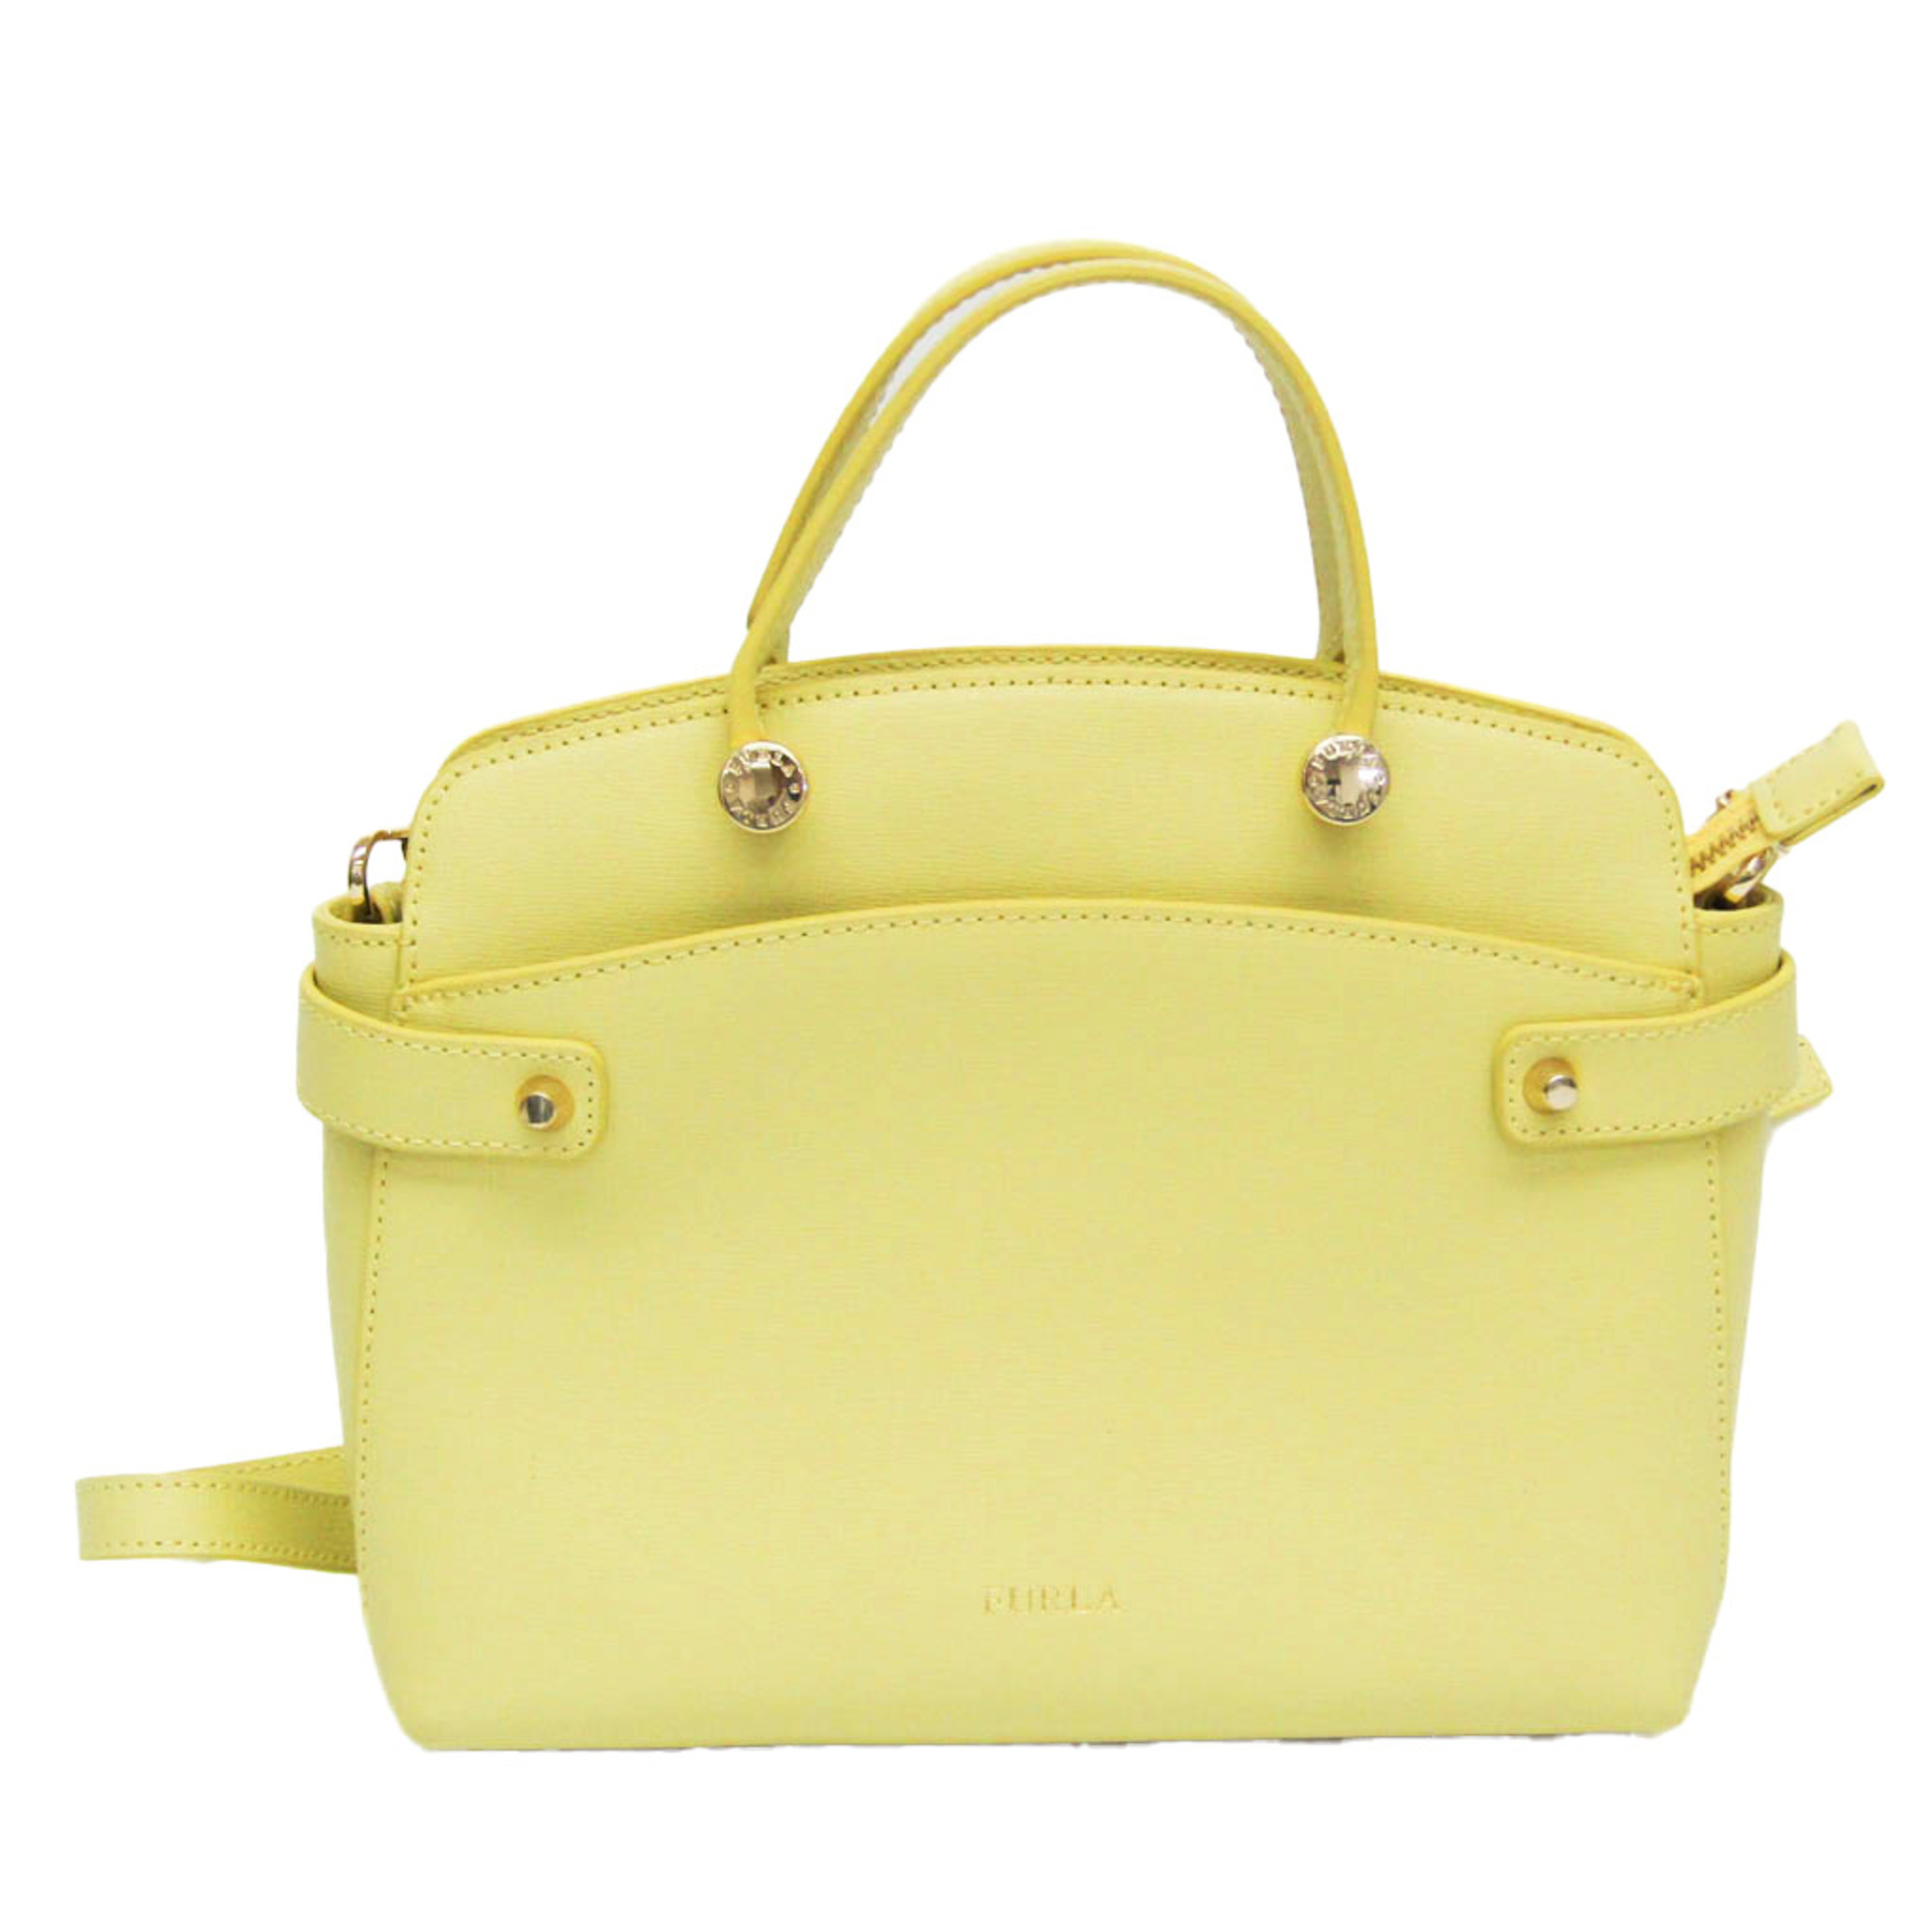 Furla AGATA Women's Leather Handbag,Shoulder Bag Yellow